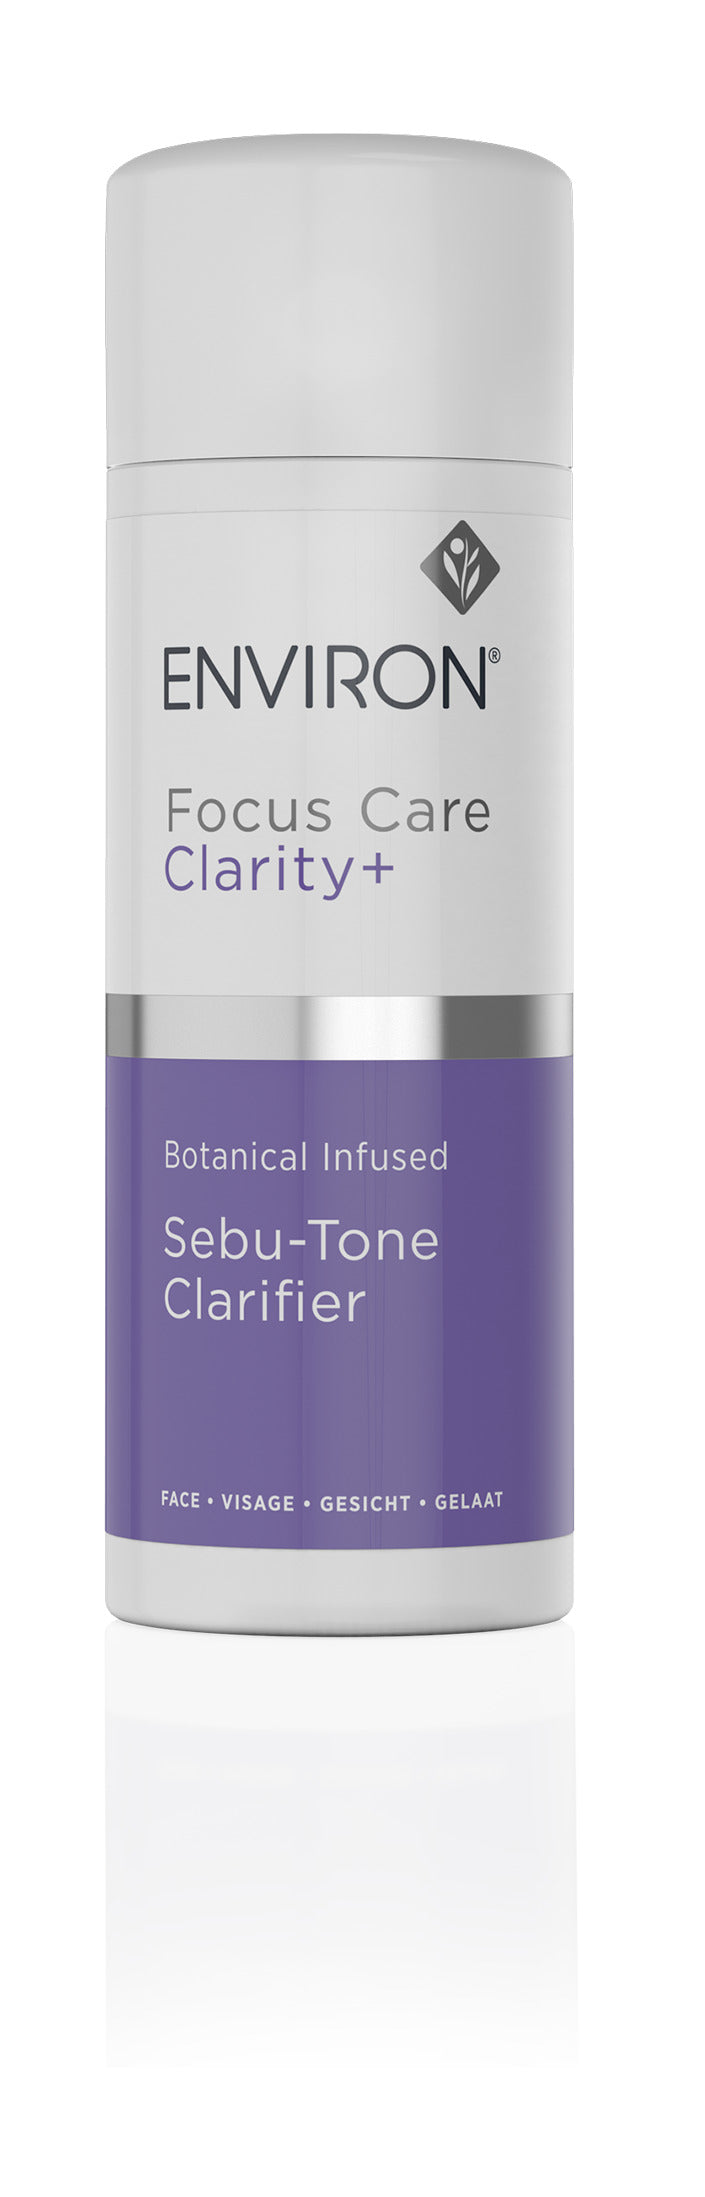 Environ Focus Care CLARITY+ Botanical Infused Sebu-Tone Clarifier